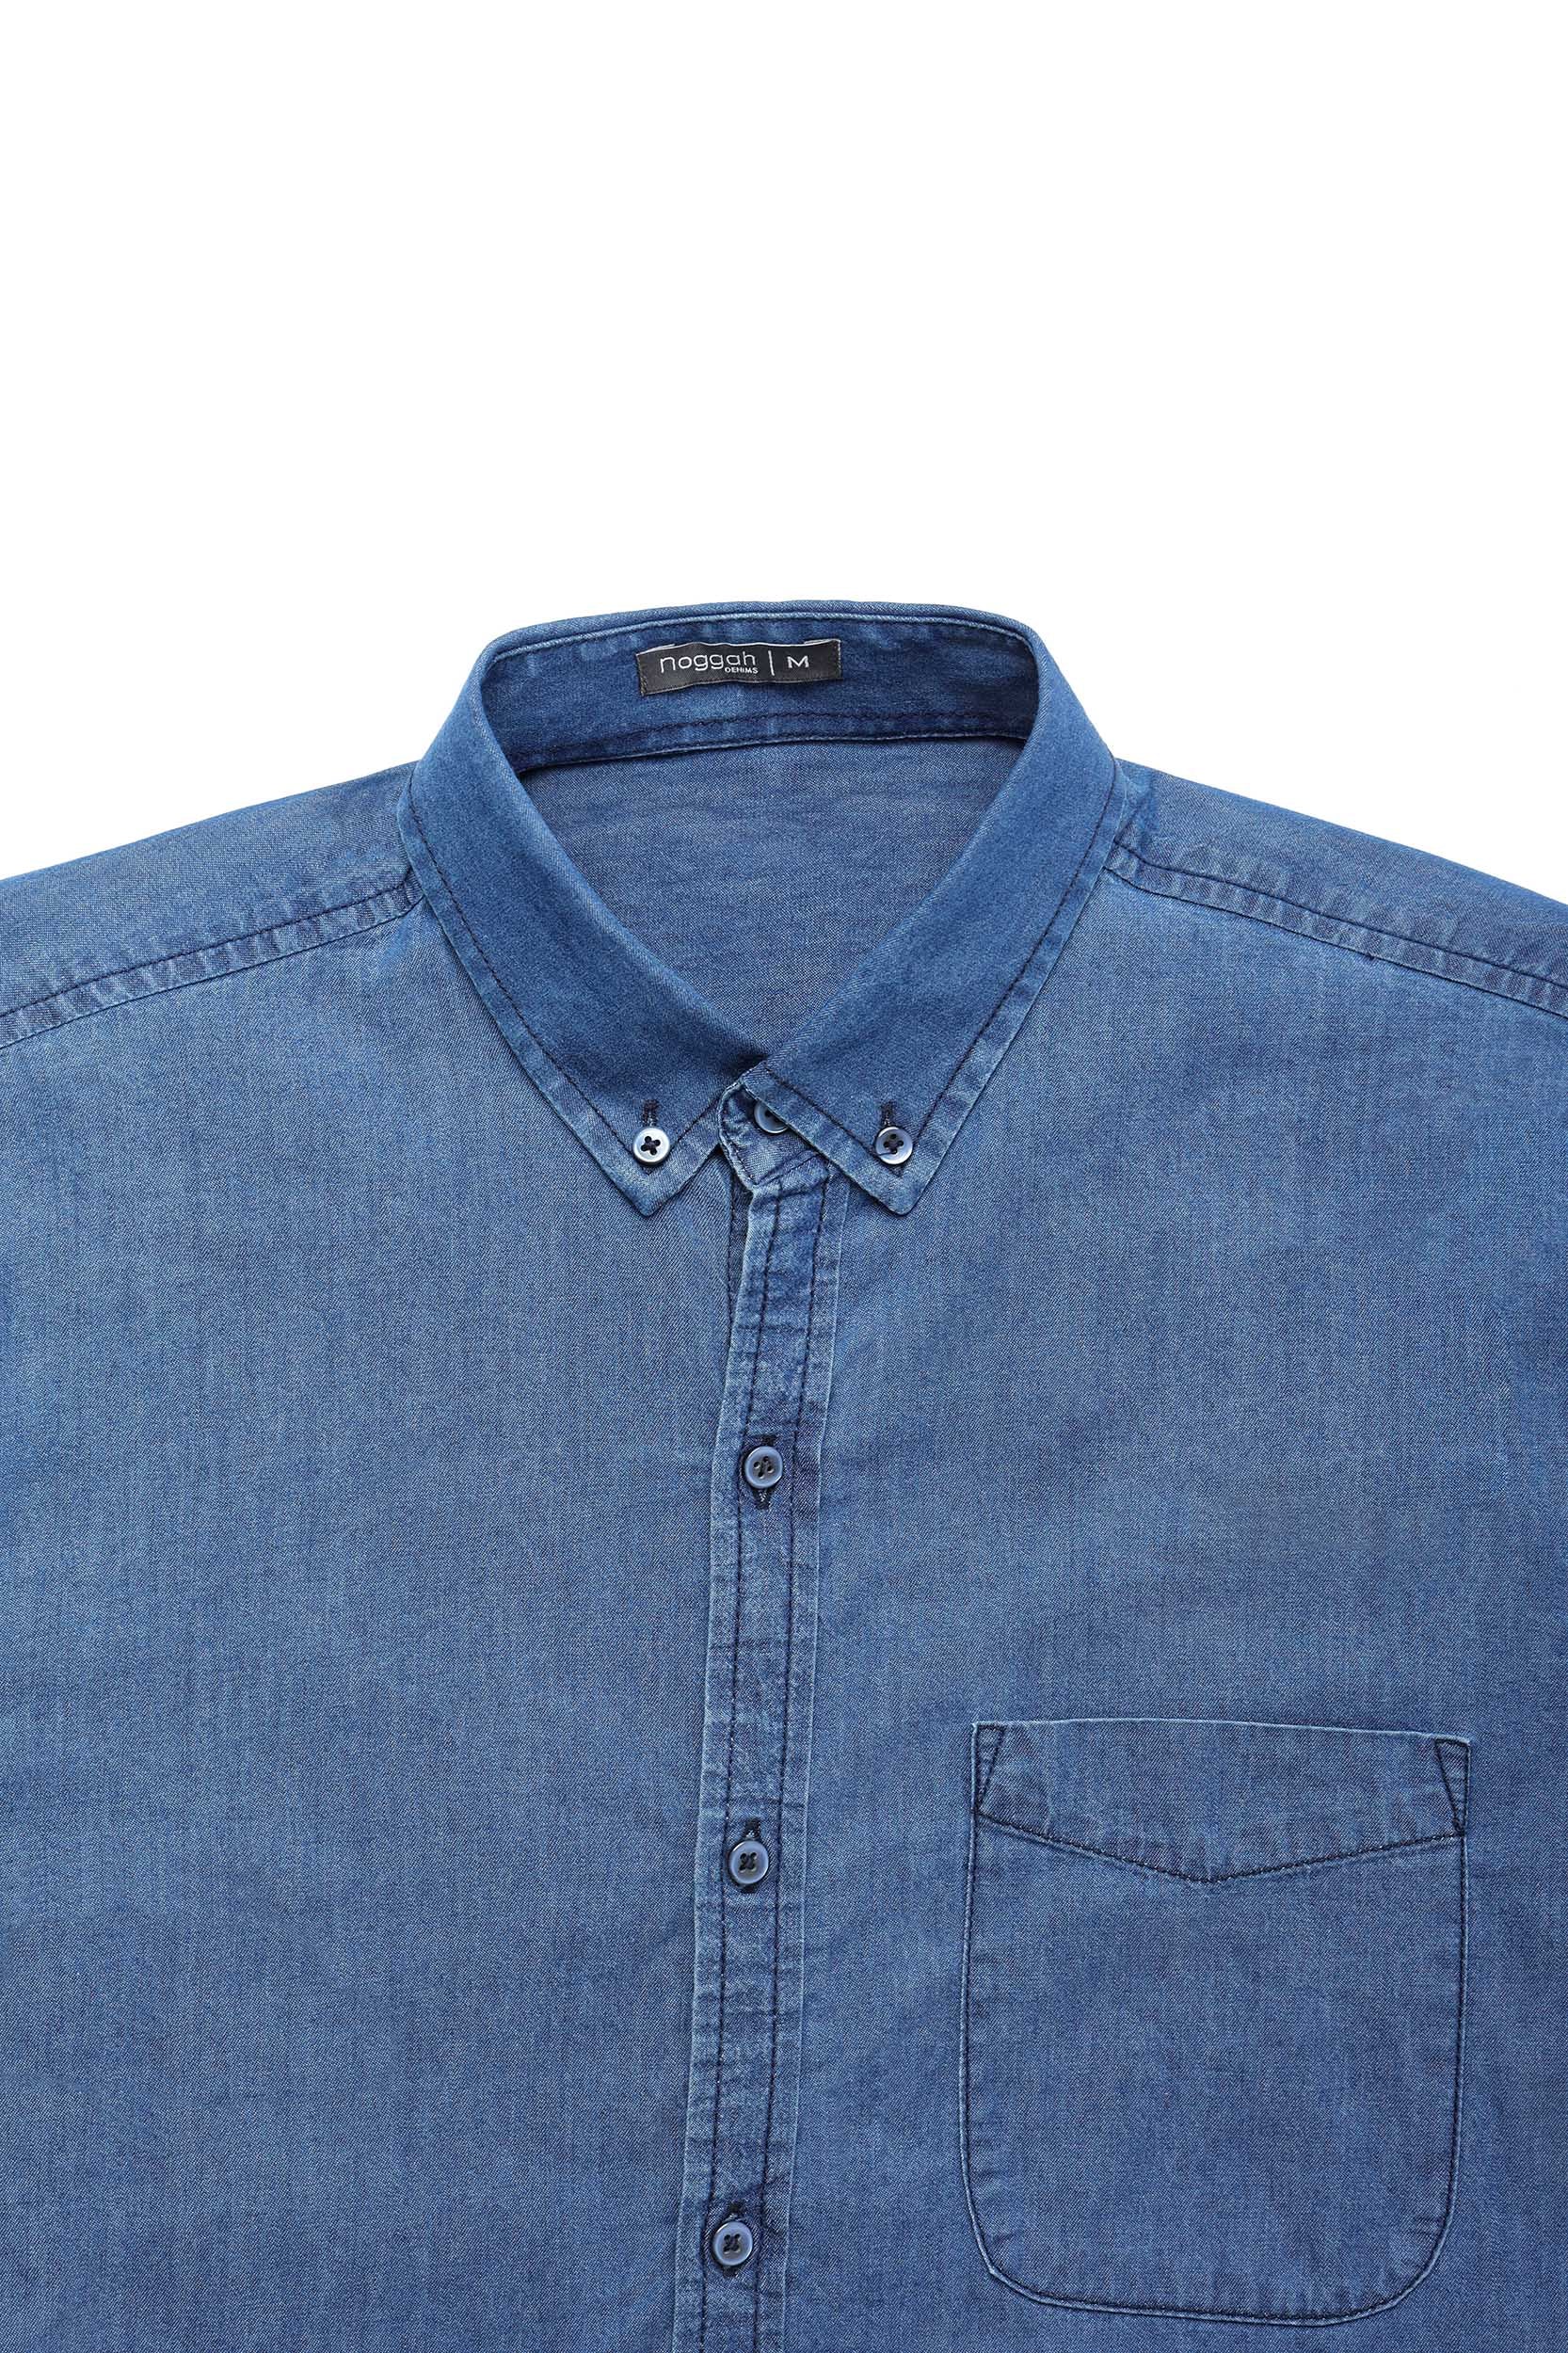 Buy Blue Shirts, Tops & Tunic for Women by Khimsariya Online | Ajio.com